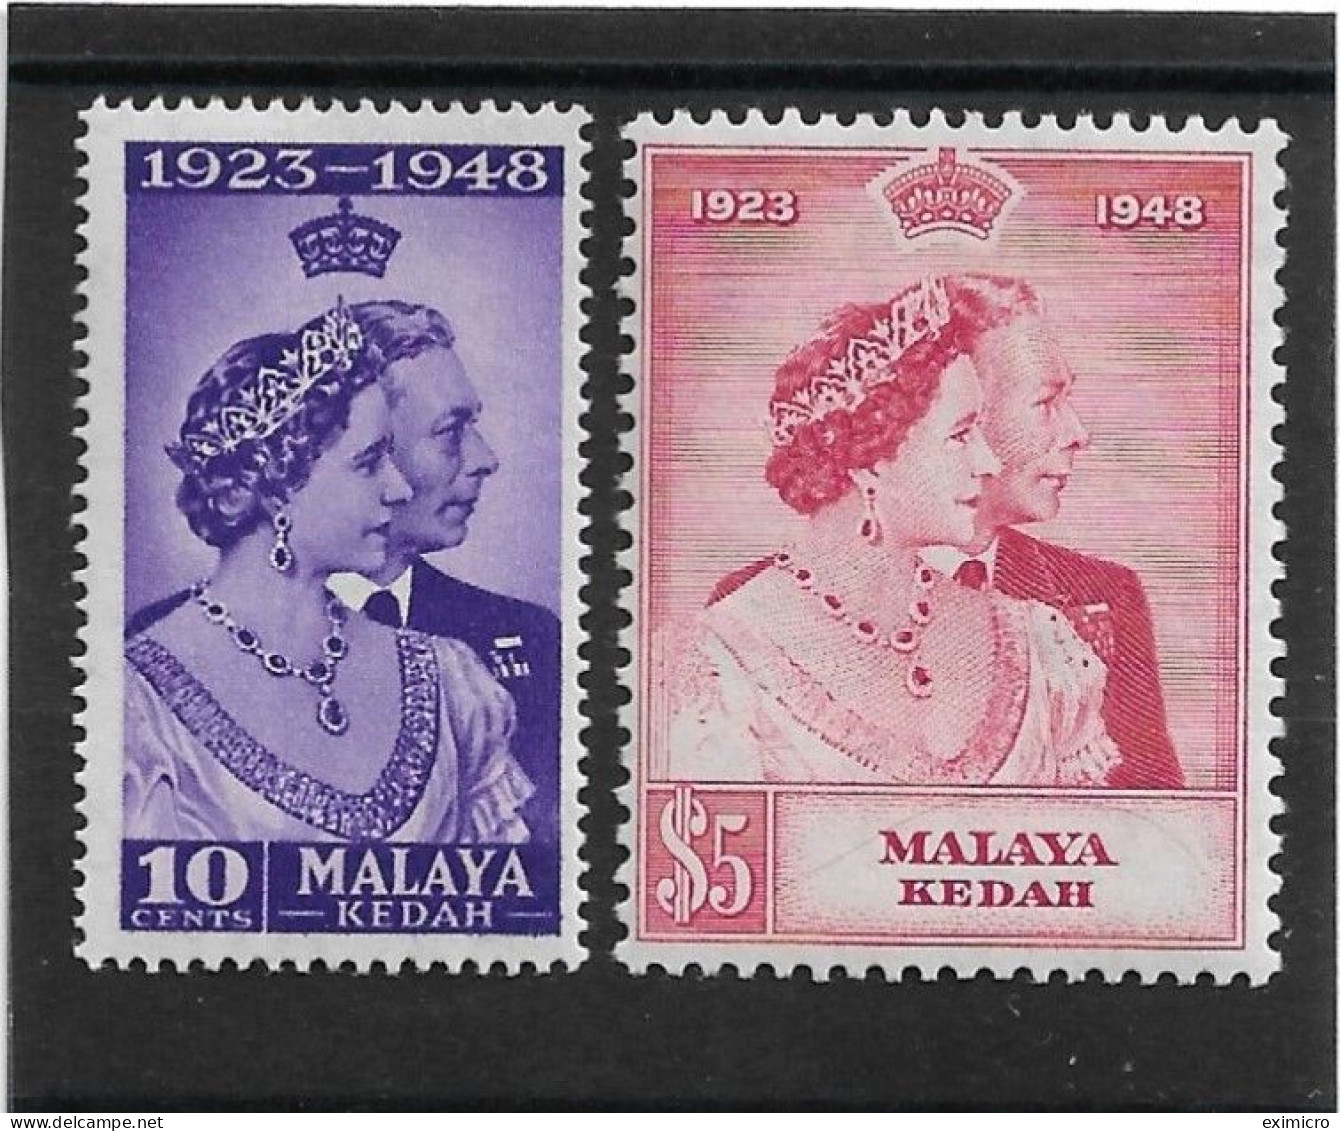 MALAYA - KEDAH 1948 SILVER WEDDING SET LIGHTLY MOUNTED MINT Cat £30+ - Kedah